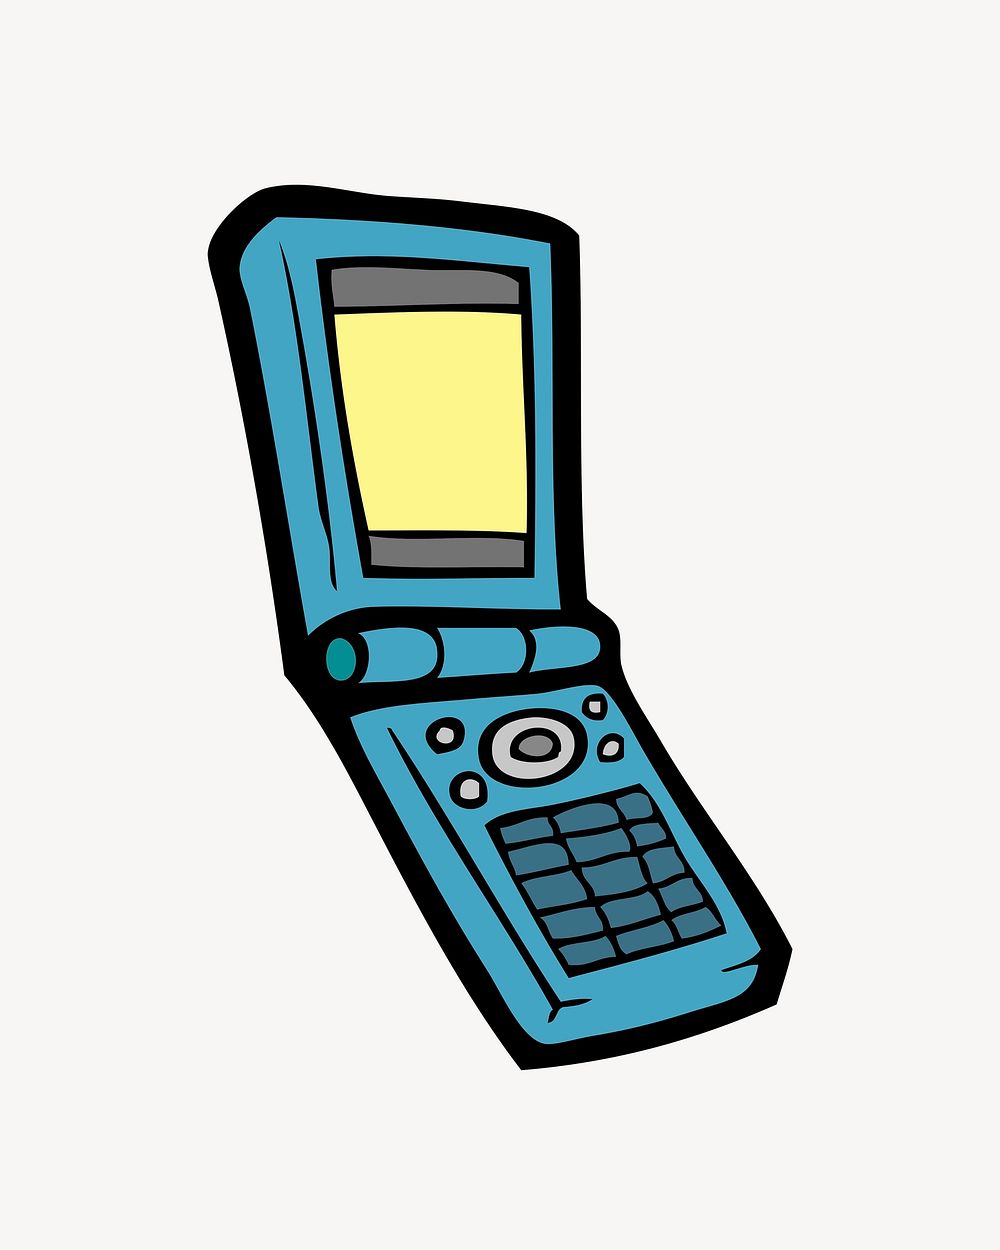 Flip phone clipart, illustration psd. Free public domain CC0 image.